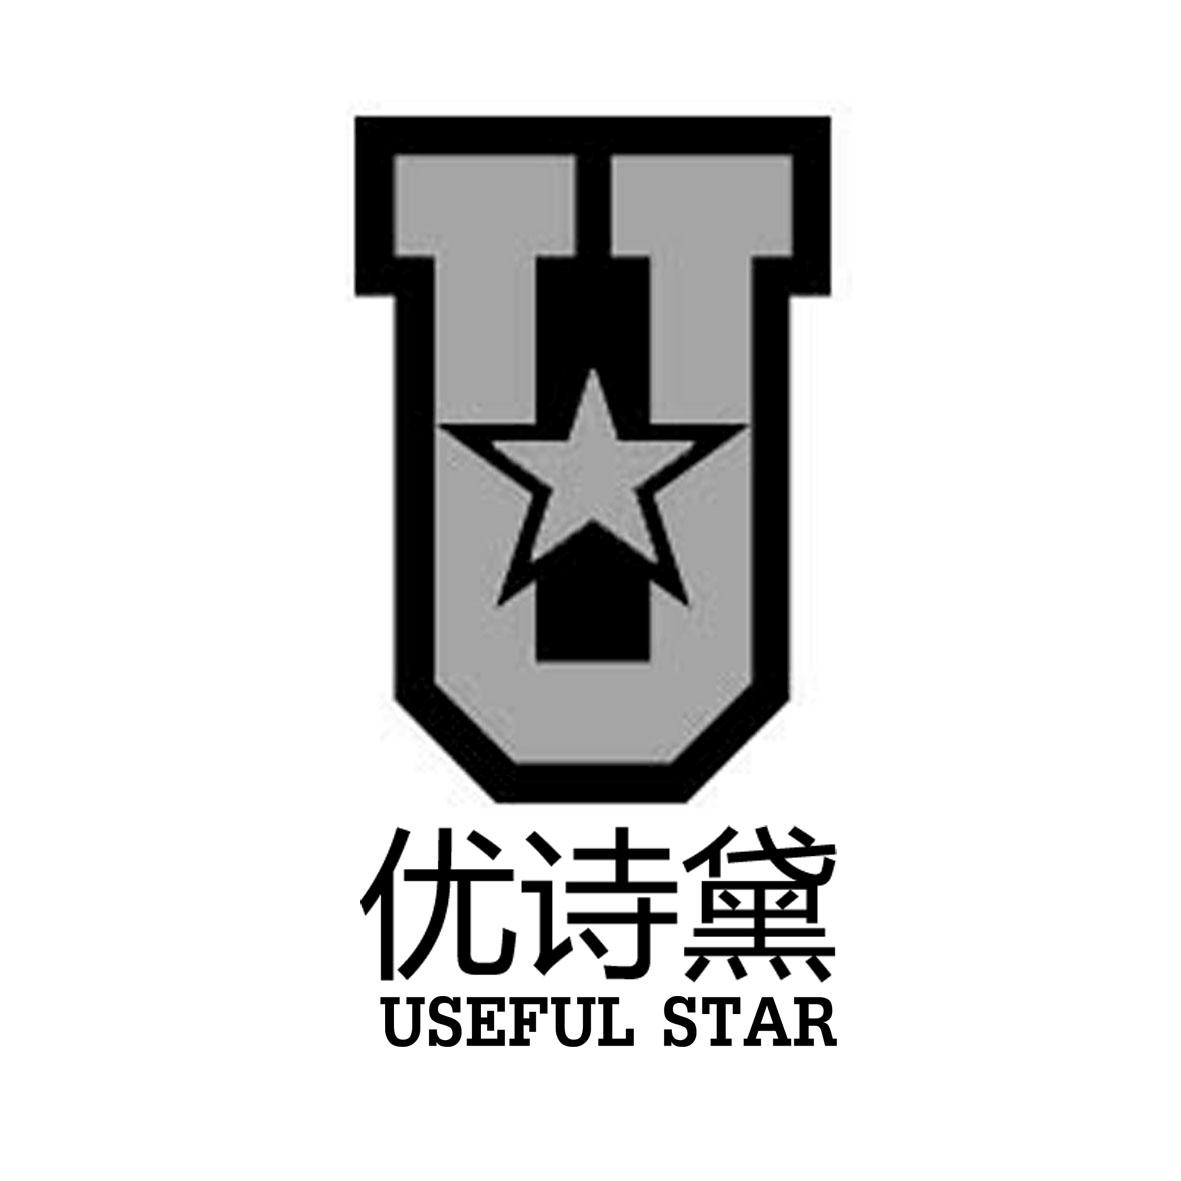 ʫ USEFUL STAR